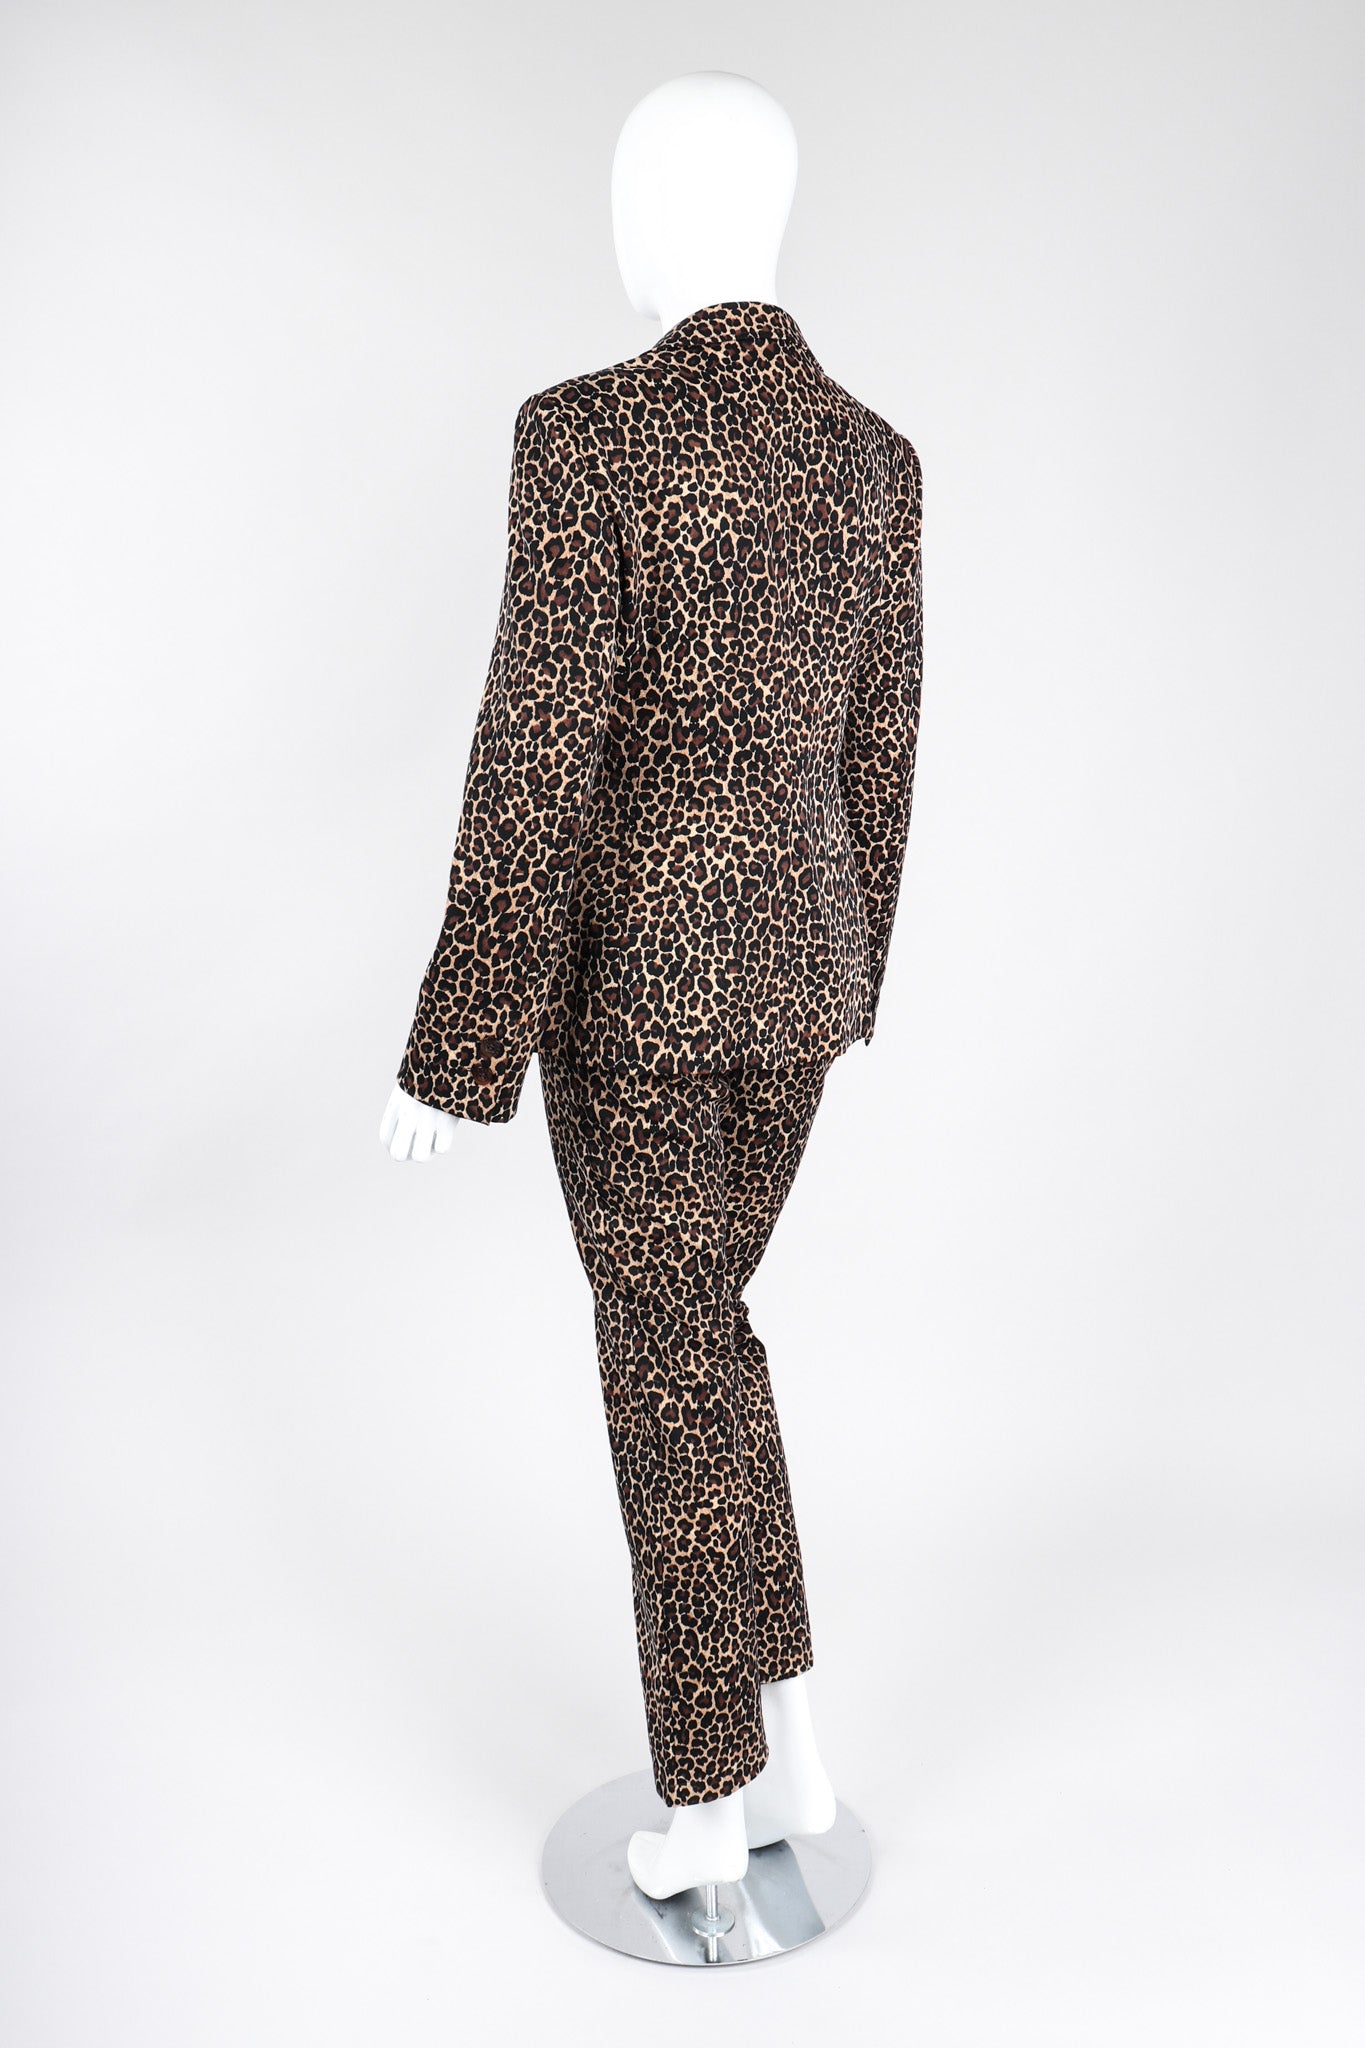 Recess Los Angeles Vintage Moschino Cheetah Print Stretch Suit Blazer Pant Set